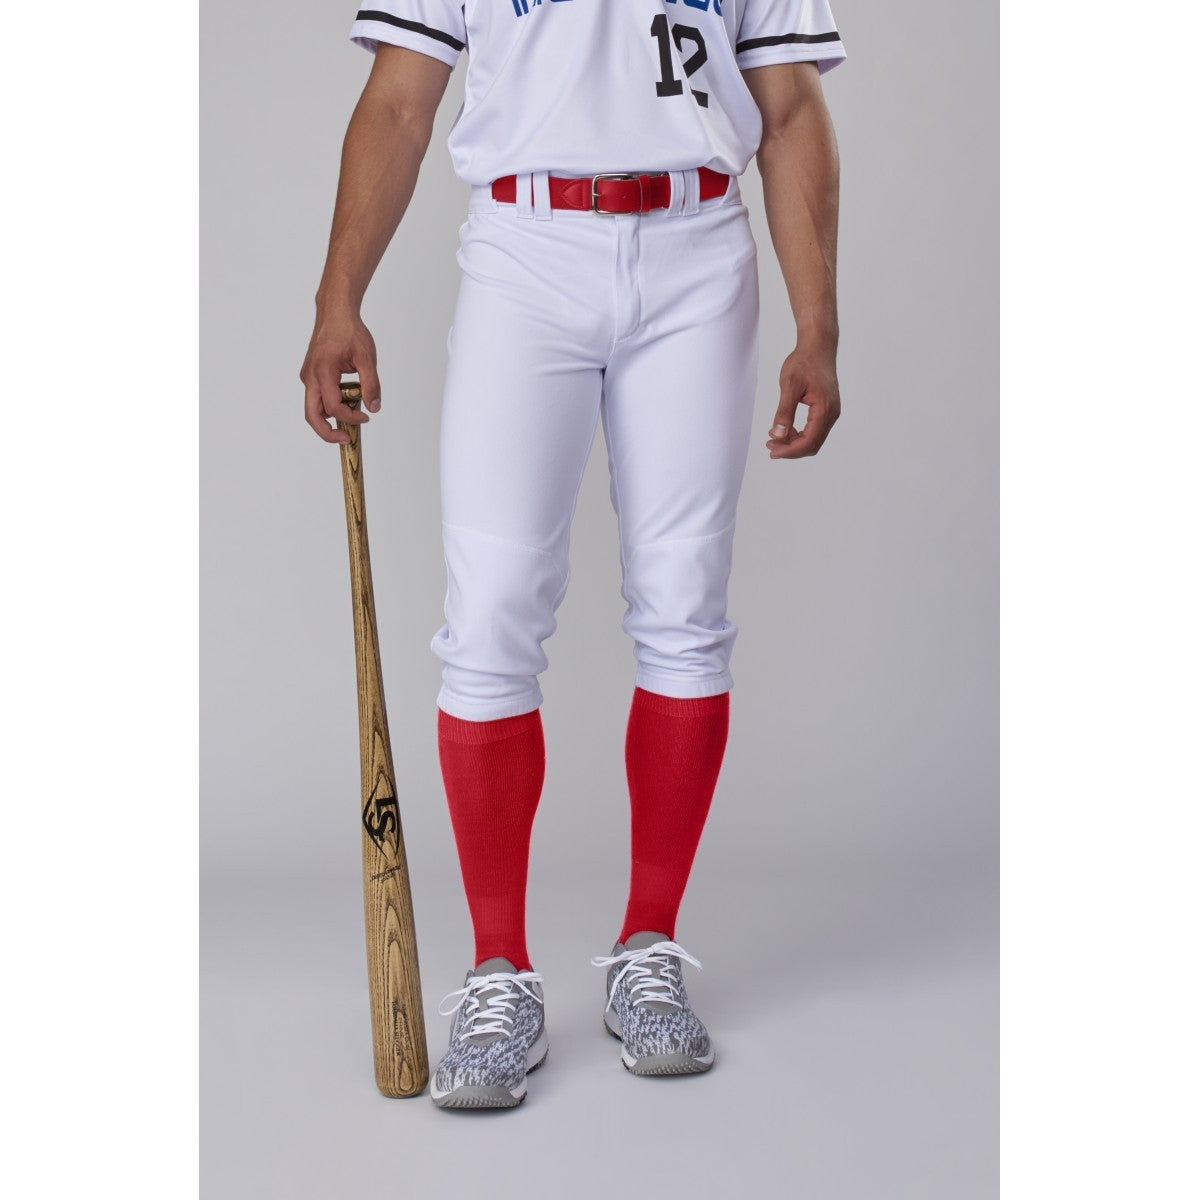 Evoshield Salute Men's Knicker Baseball Pants - White